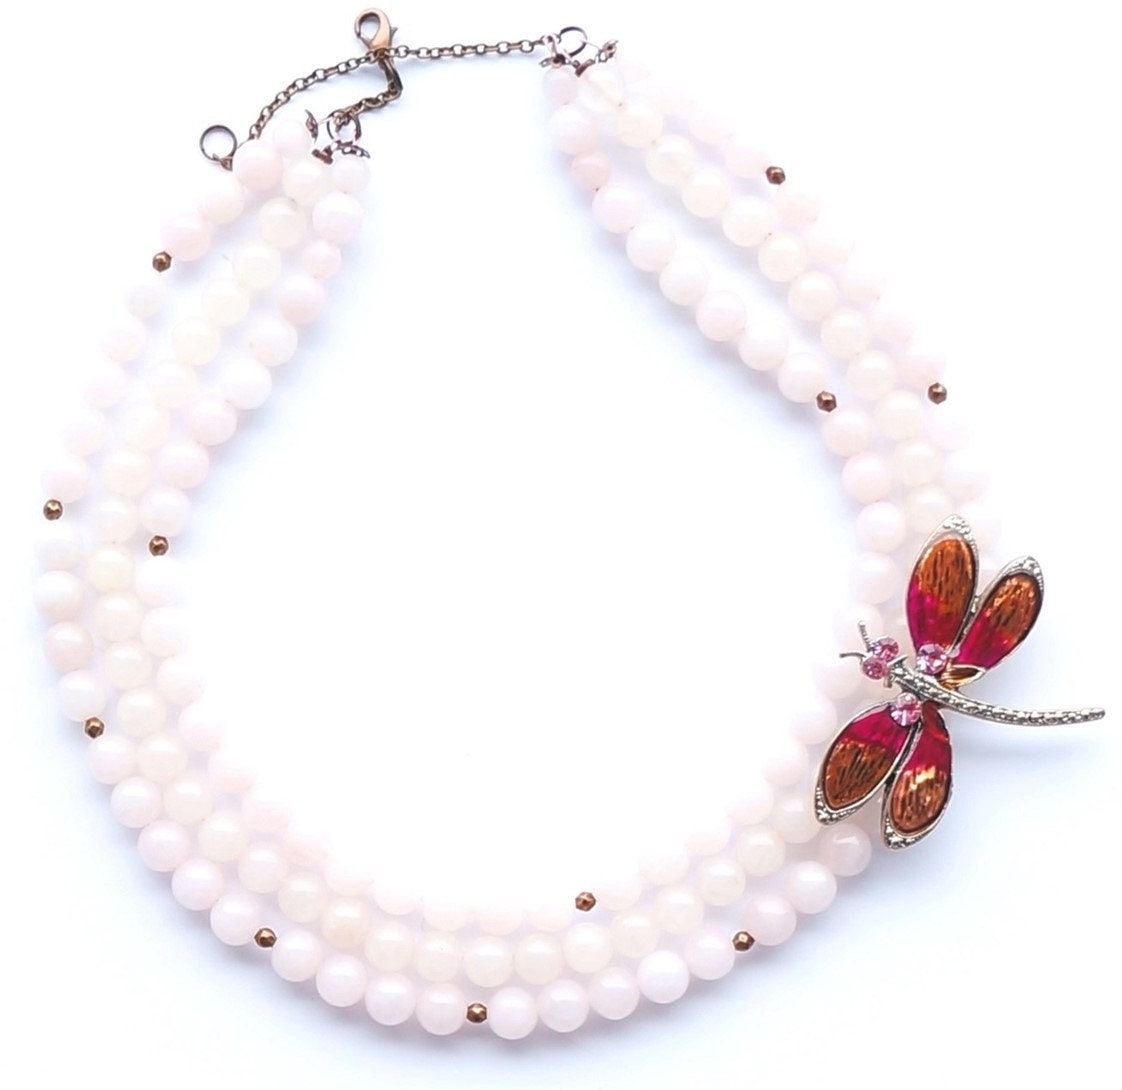 Perle toupie cristal rouge 3.5x3mm, perles bijoux, perle bicone cristal  rouge vif,Perle verre facette, fil de 125 perles G7877